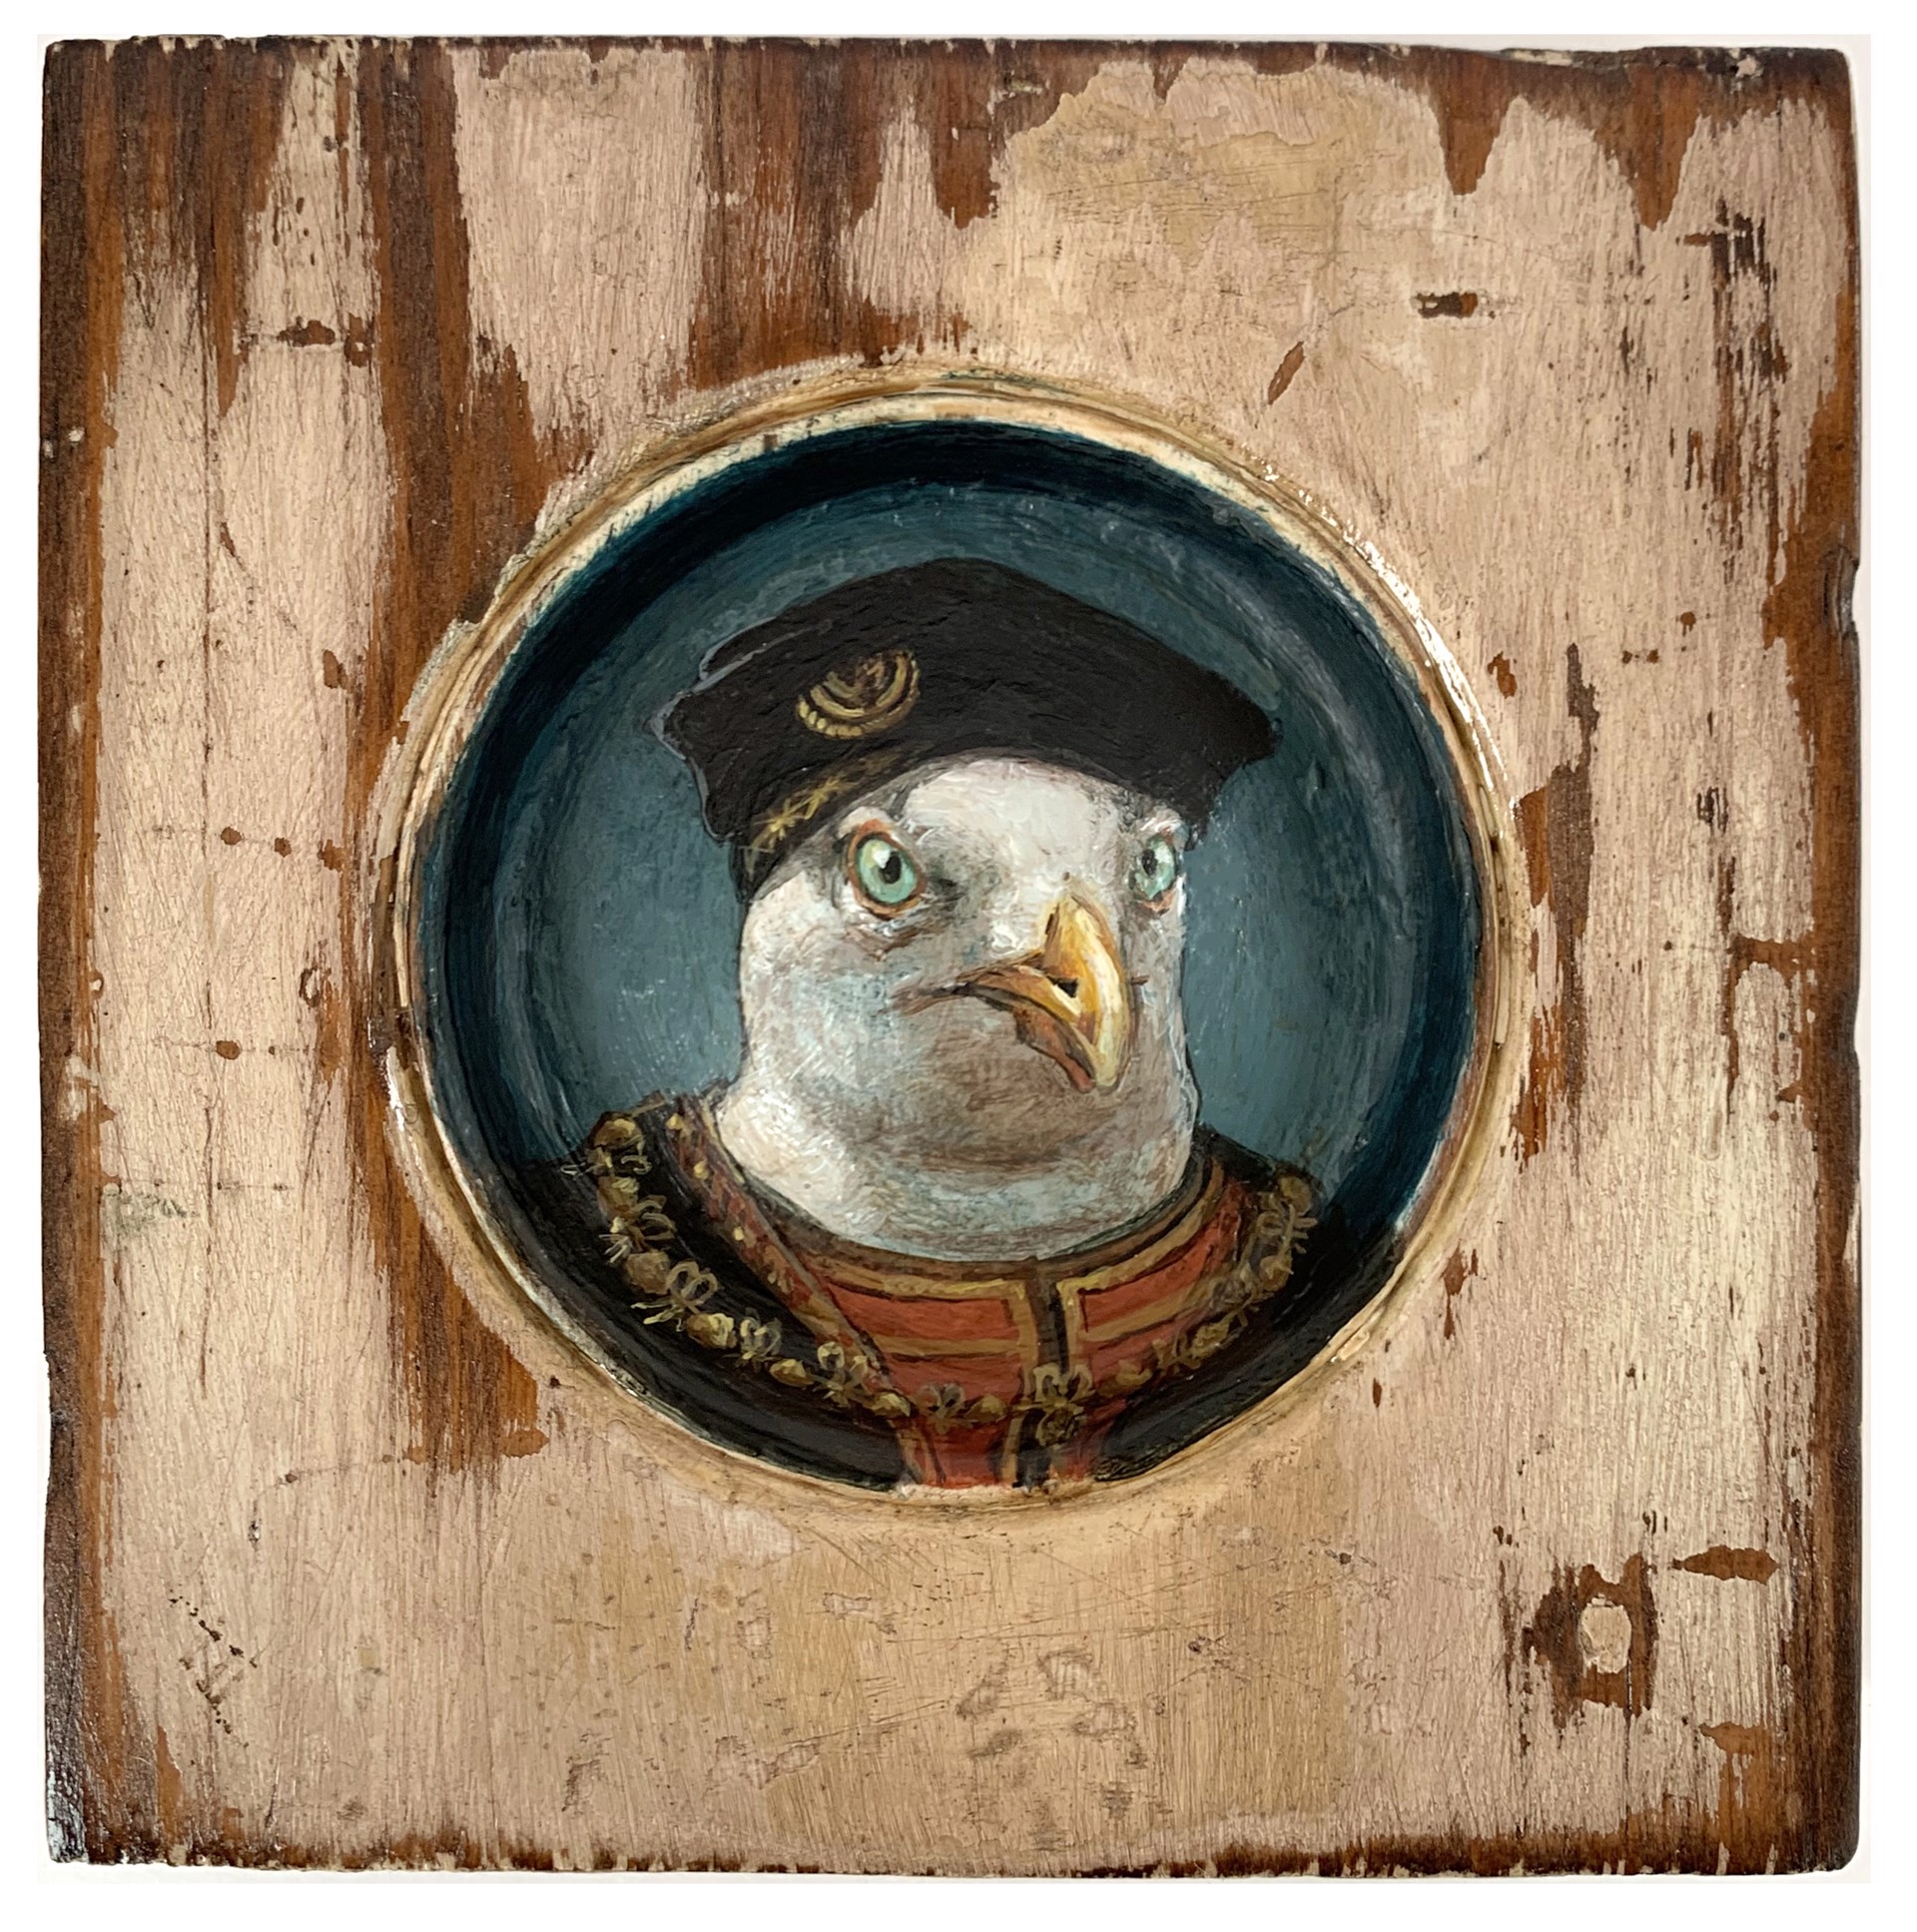 Seagull, Marshall of France by Cassandra Kim